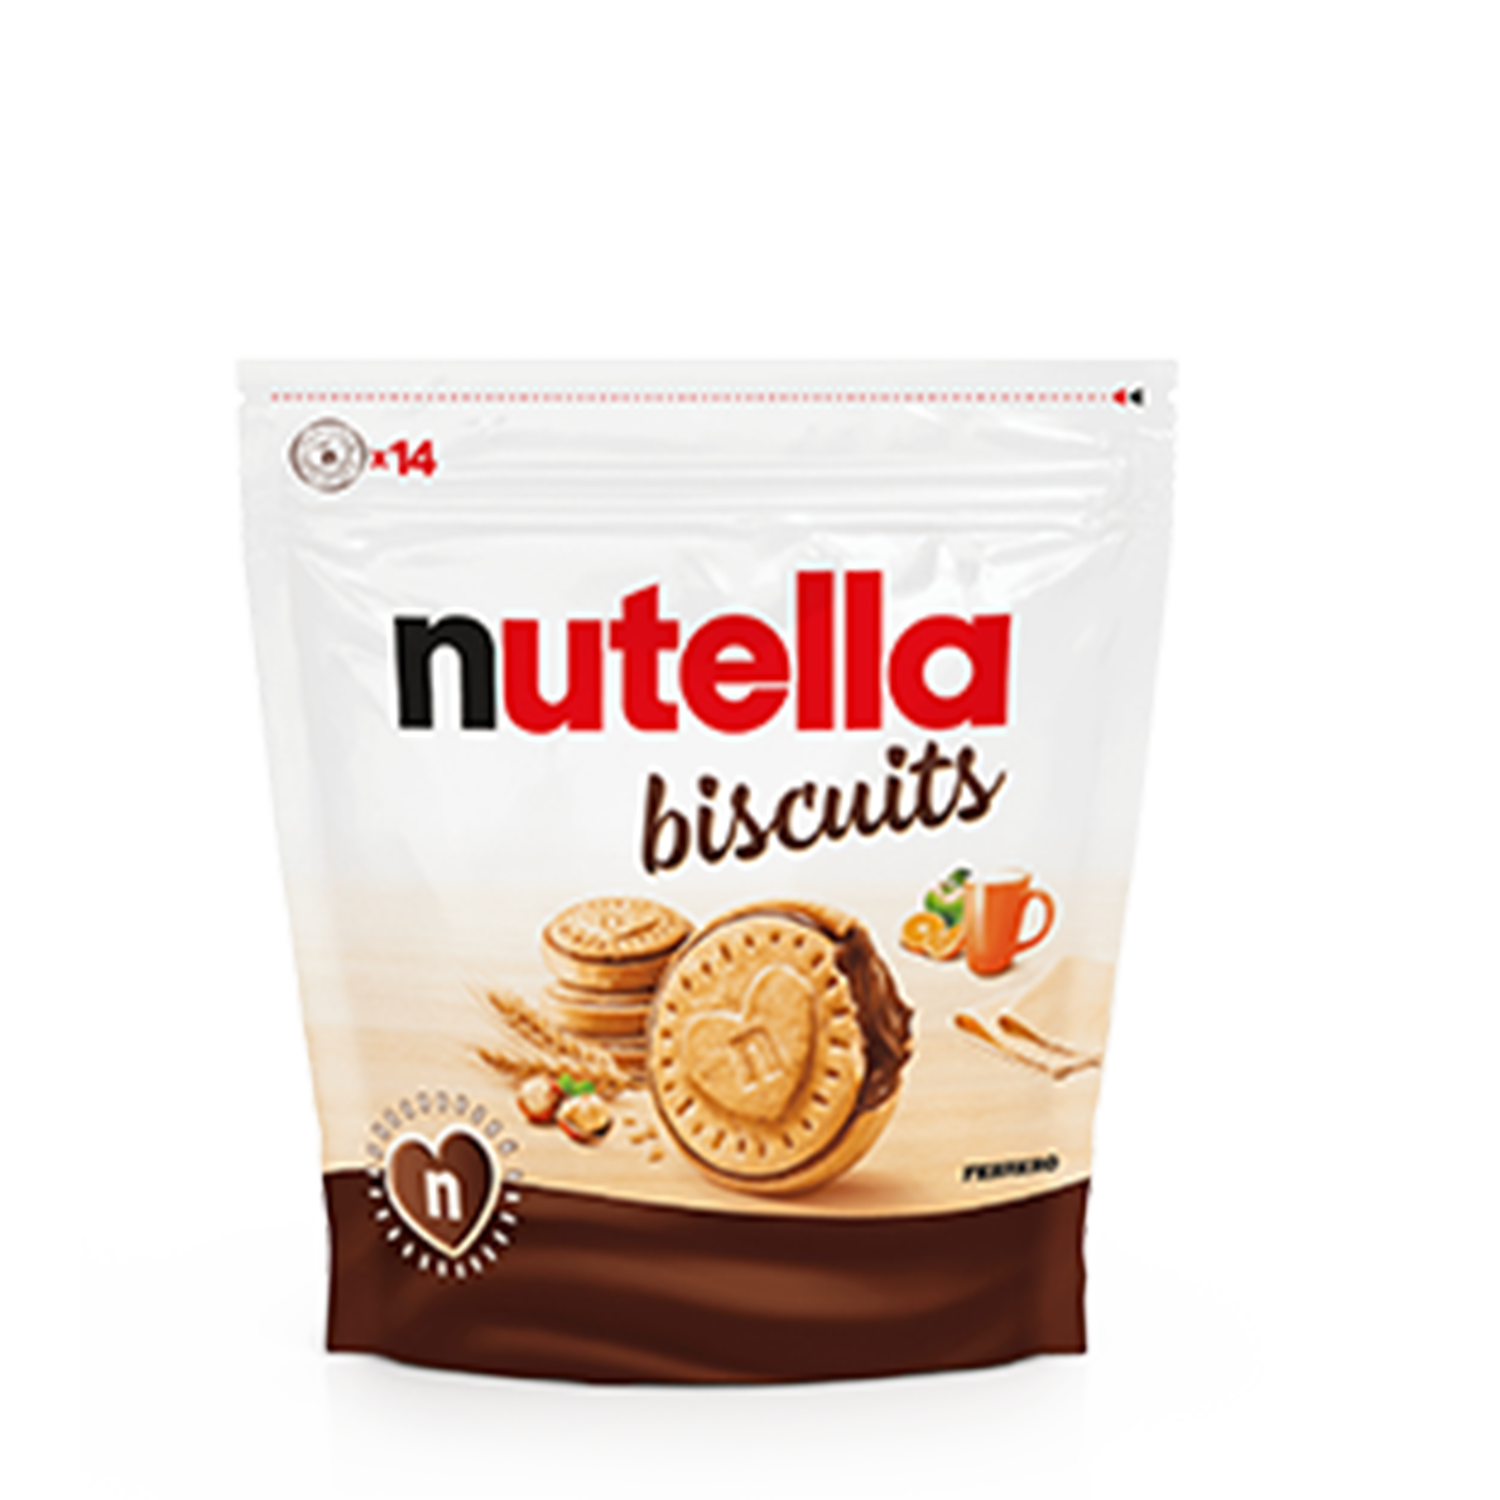 Nutella Biscuits t14